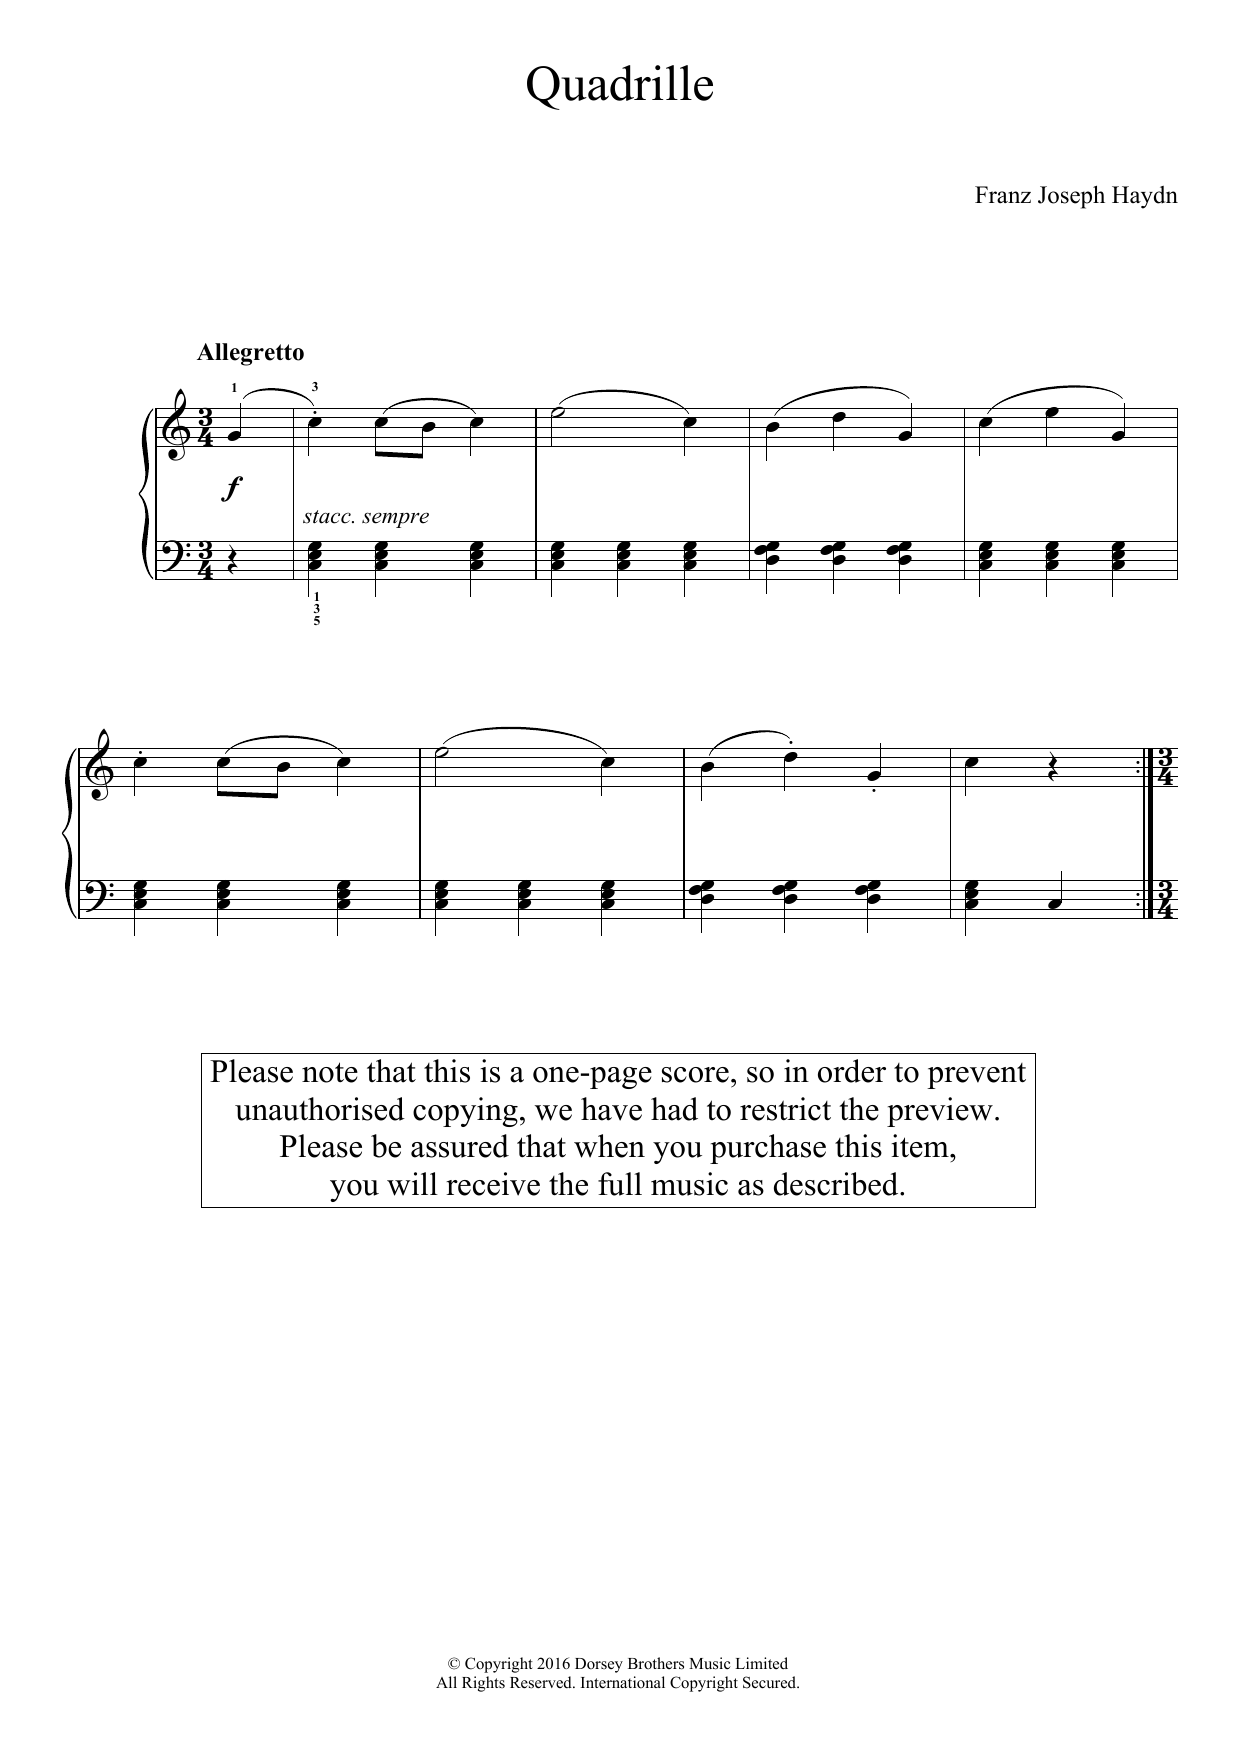 Download Franz Joseph Haydn Quadrille Sheet Music